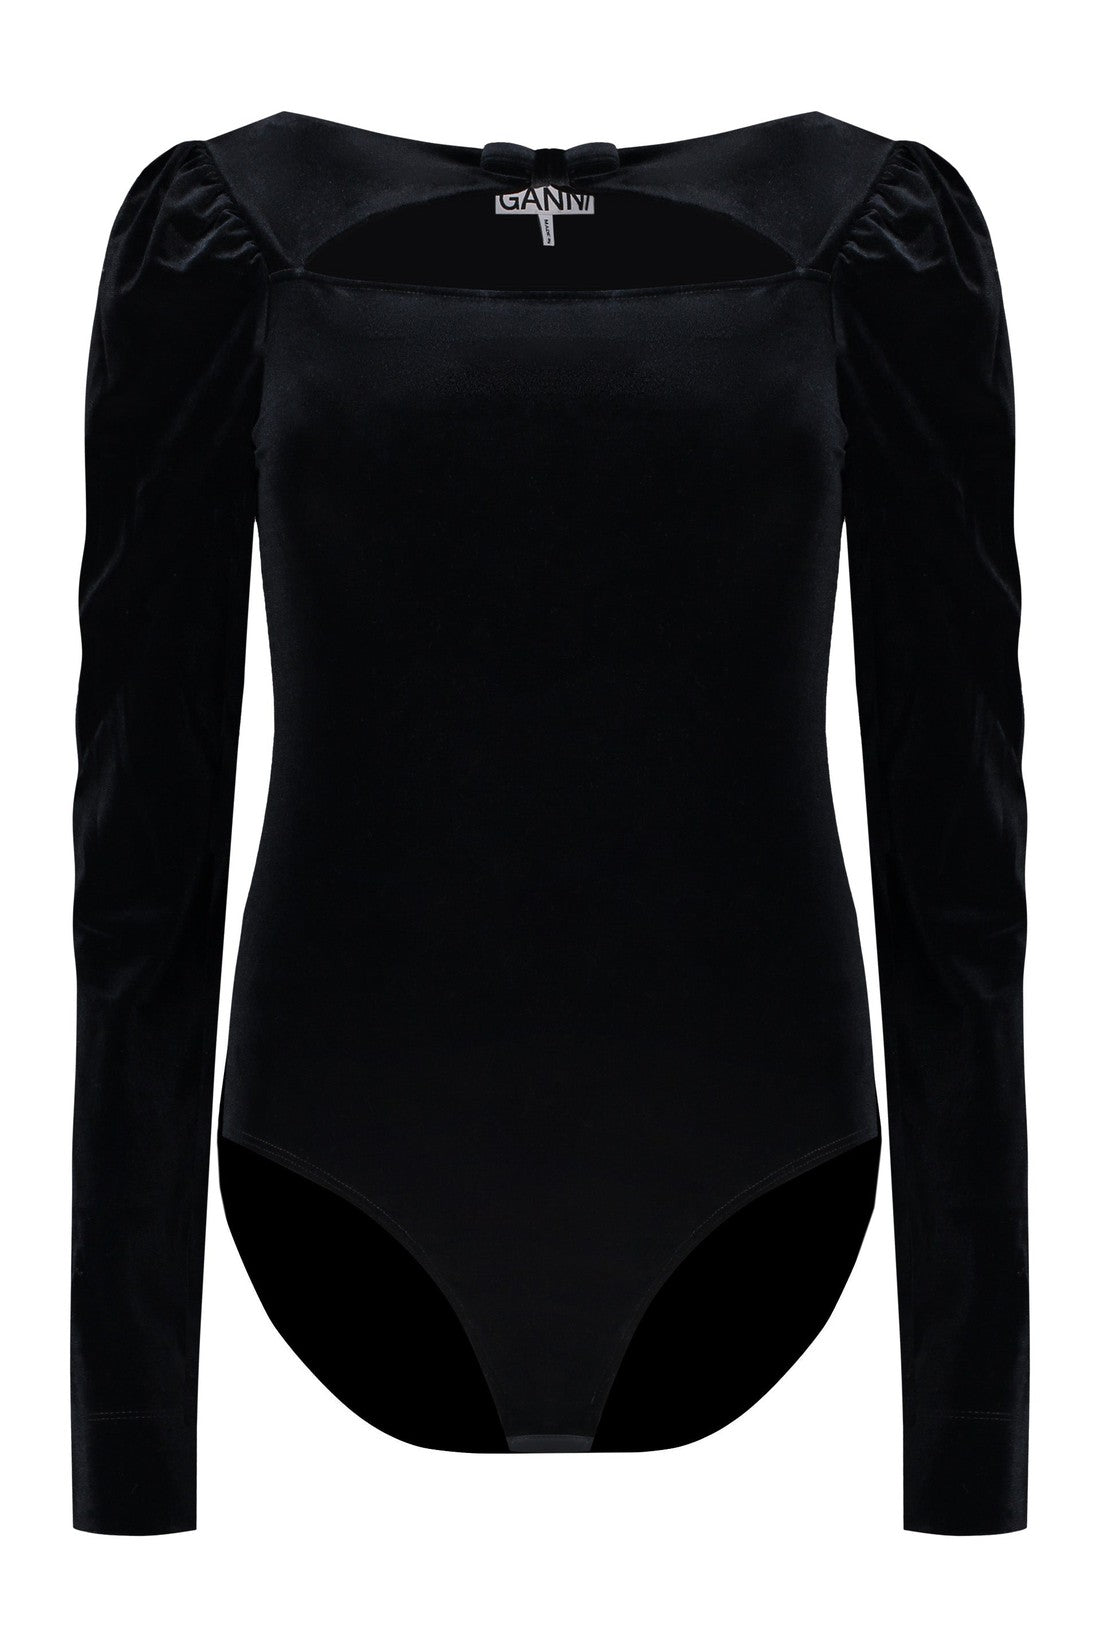 GANNI-OUTLET-SALE-Velvet bodysuit-ARCHIVIST